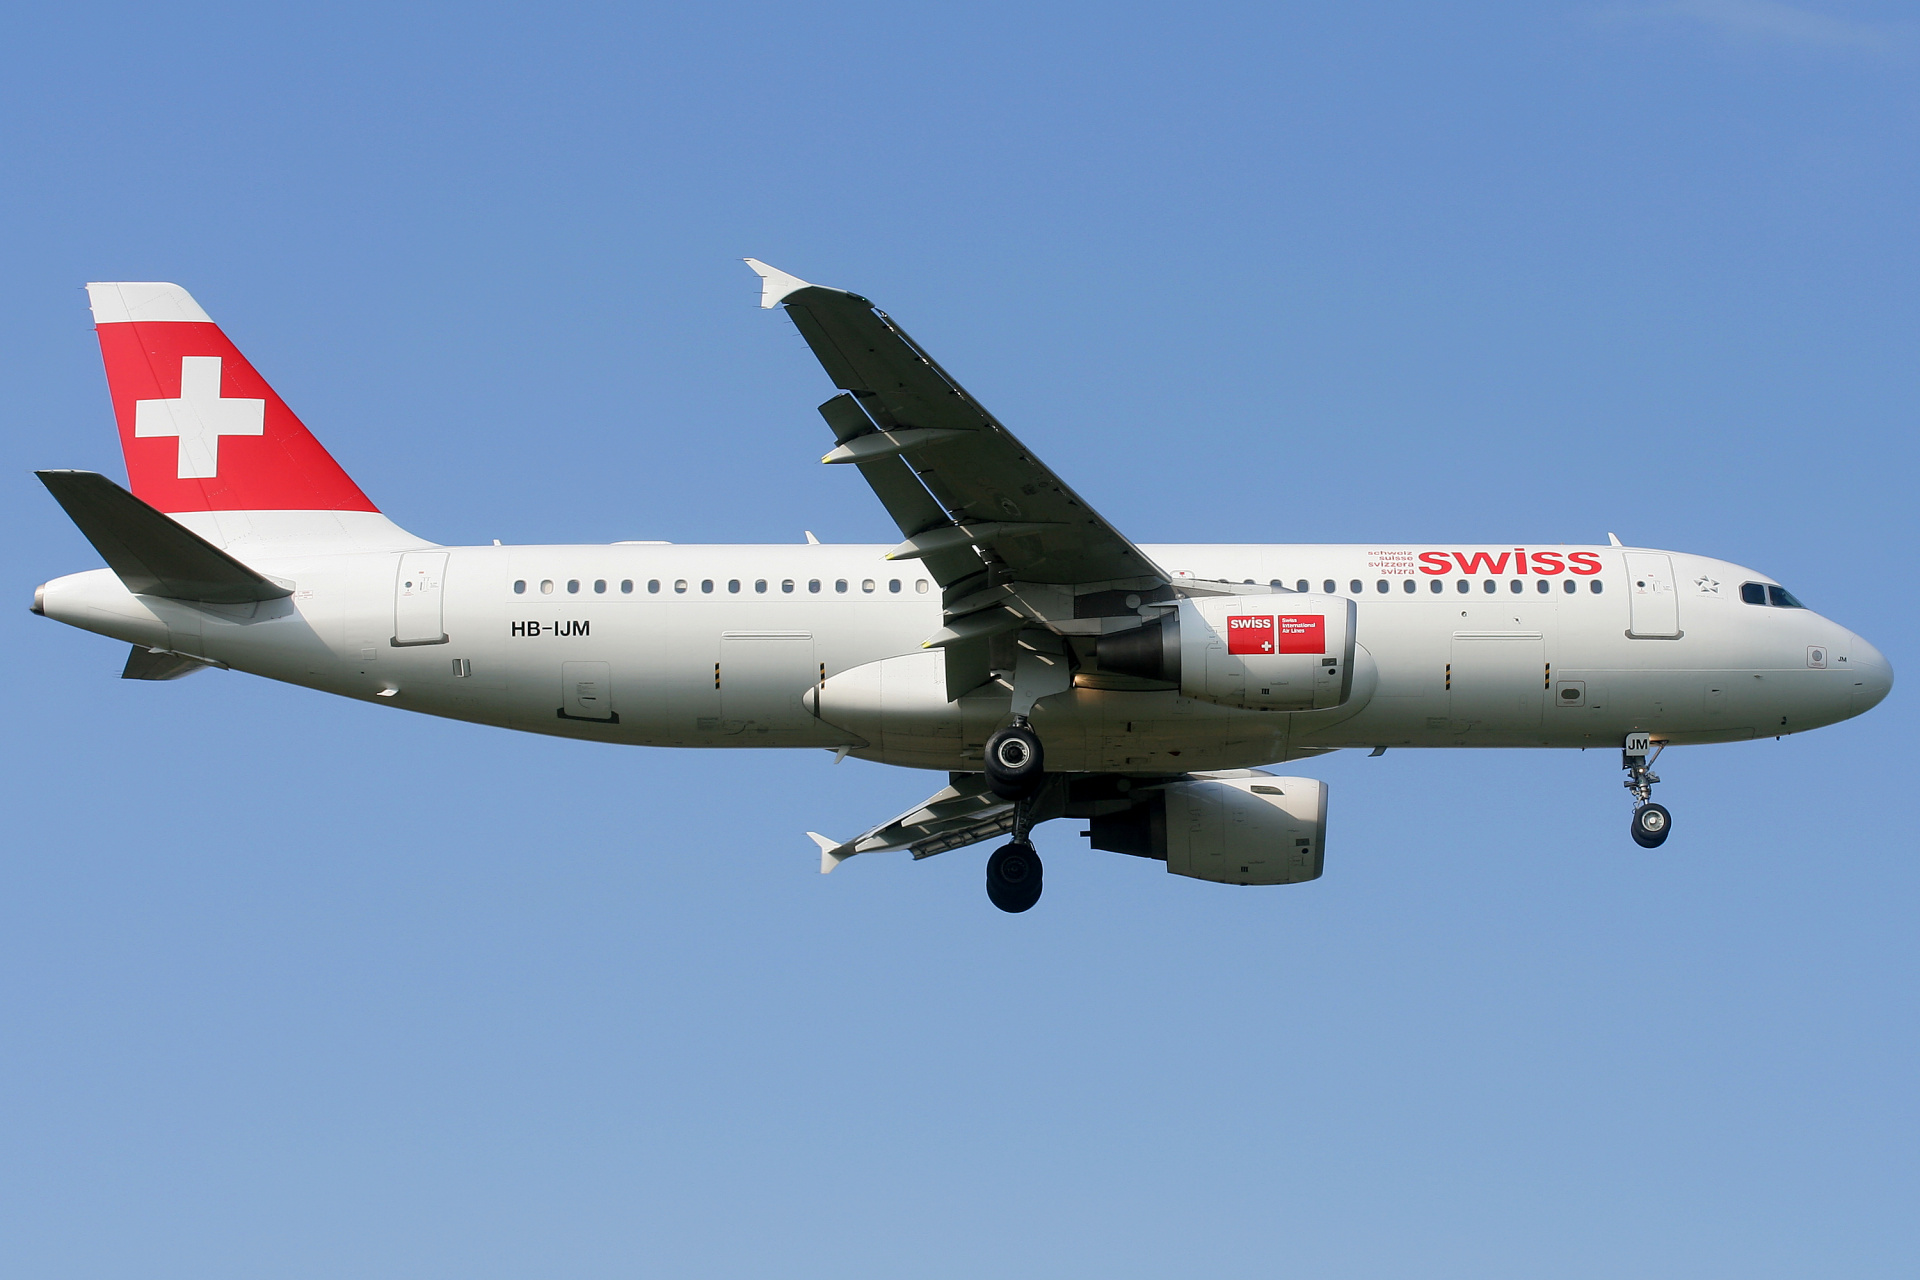 HB-IJM (Aircraft » EPWA Spotting » Airbus A320-200 » Swiss International Air Lines)